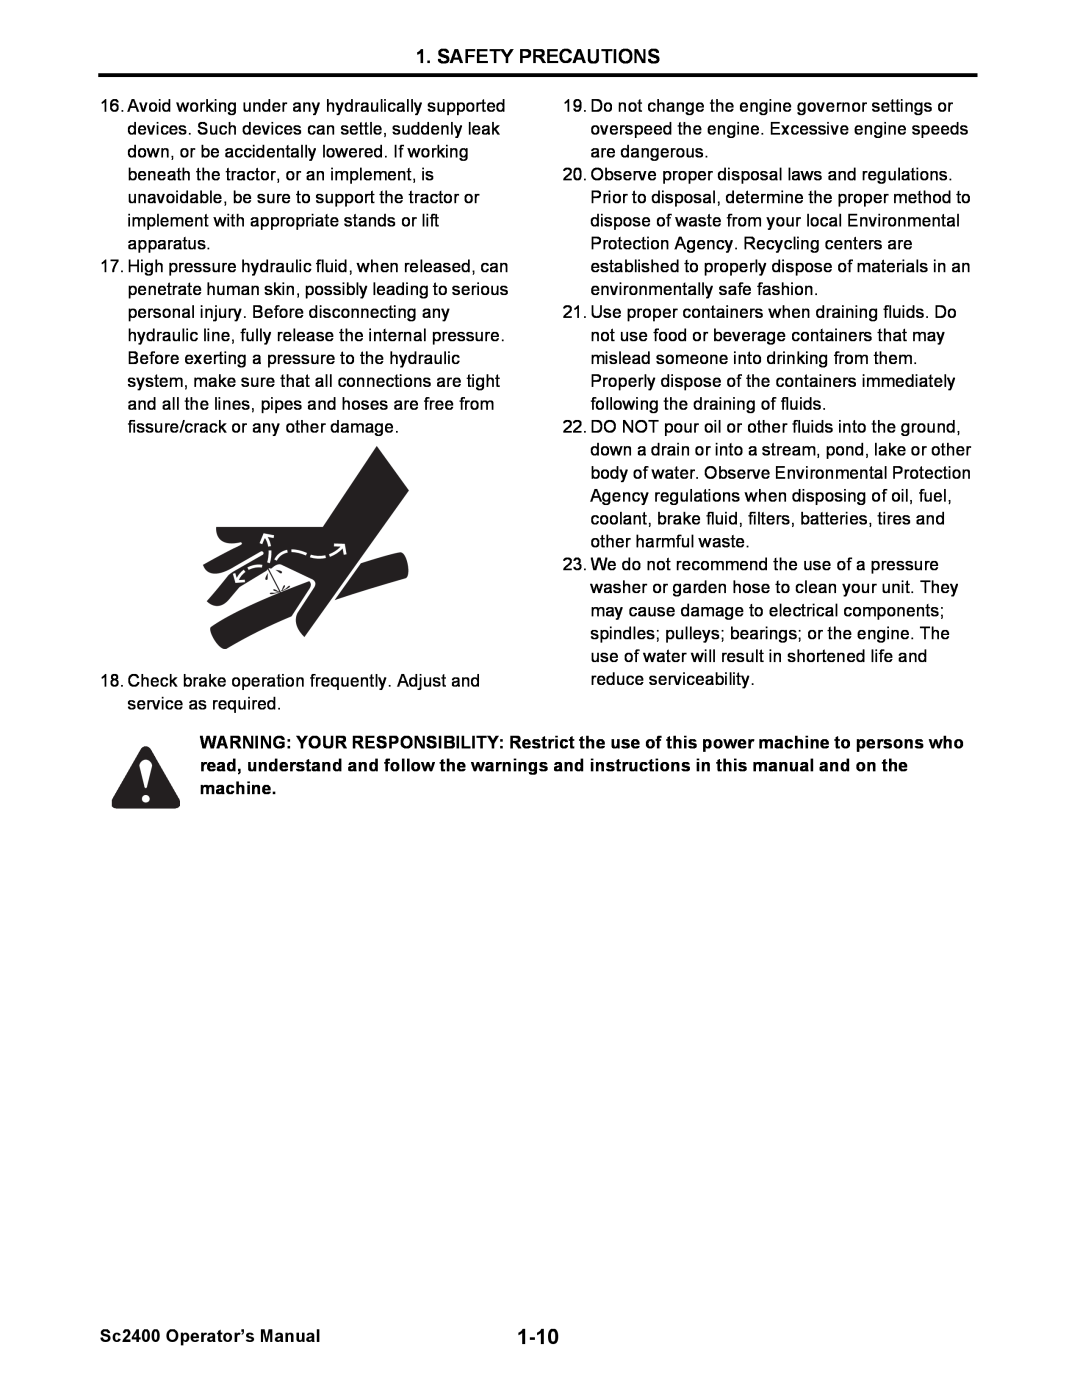 Cub Cadet SC2400 manual Safety Precautions, Sc2400 Operator’s Manual 